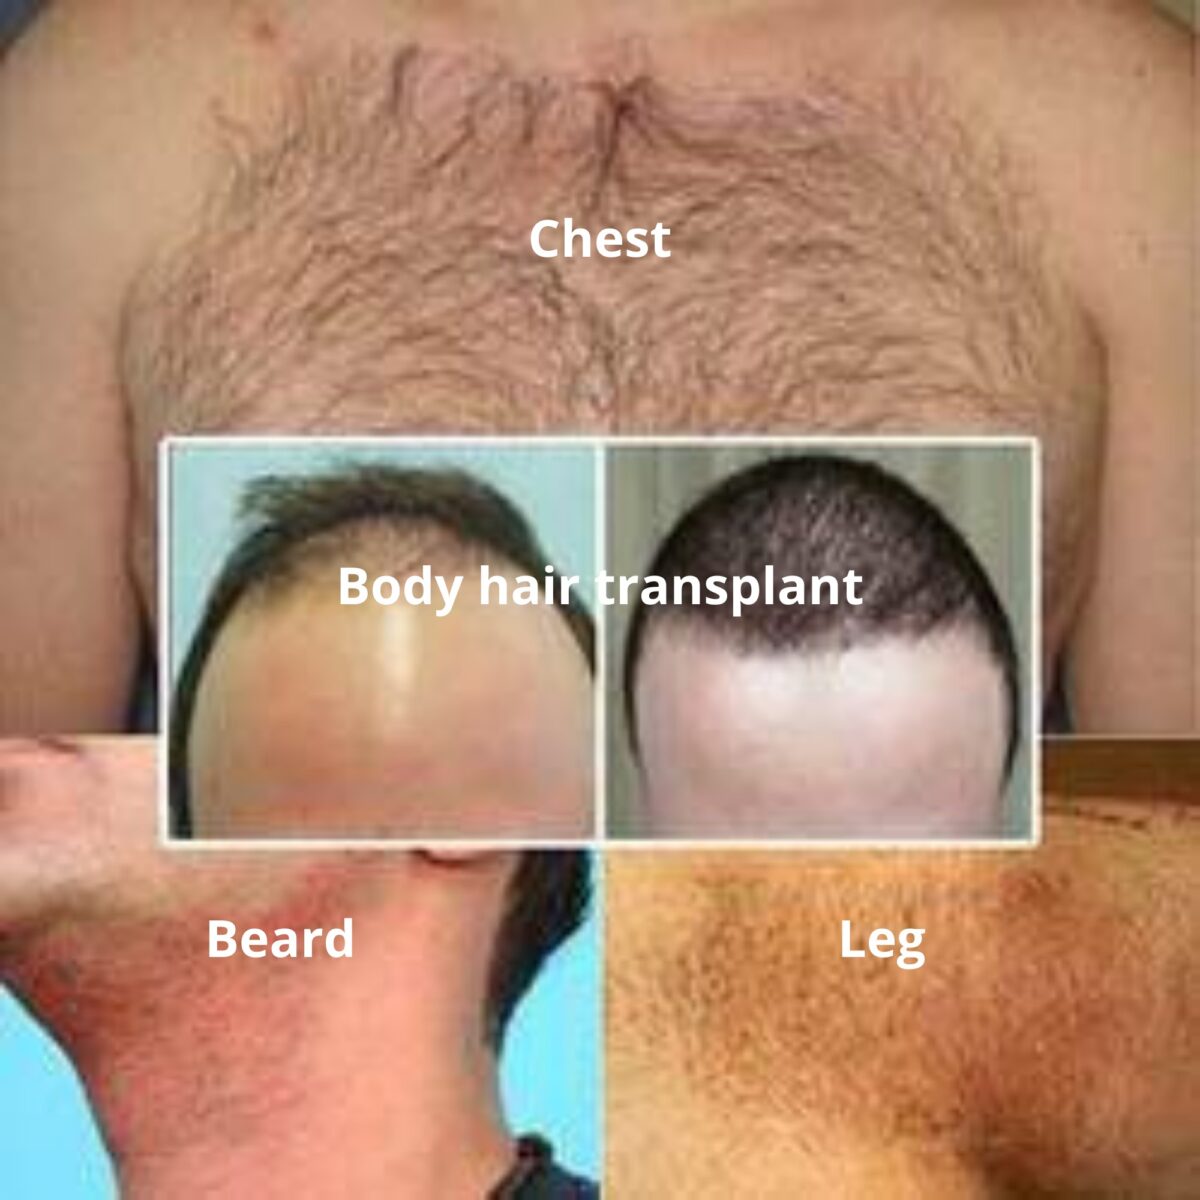 Body Hair Transplant